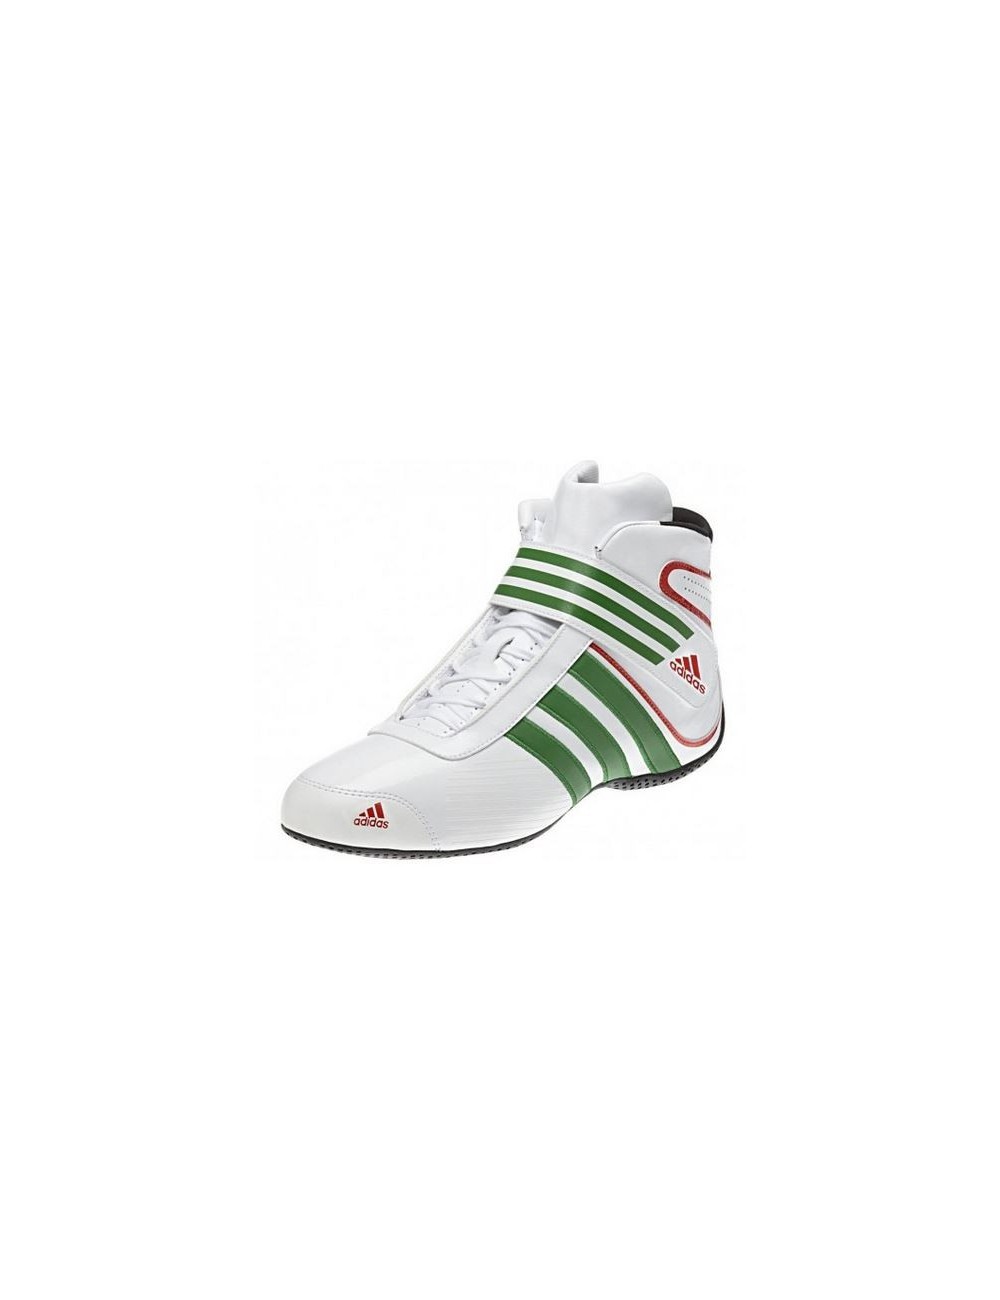 Chaussure Adidas Karting XLT blanc /vert